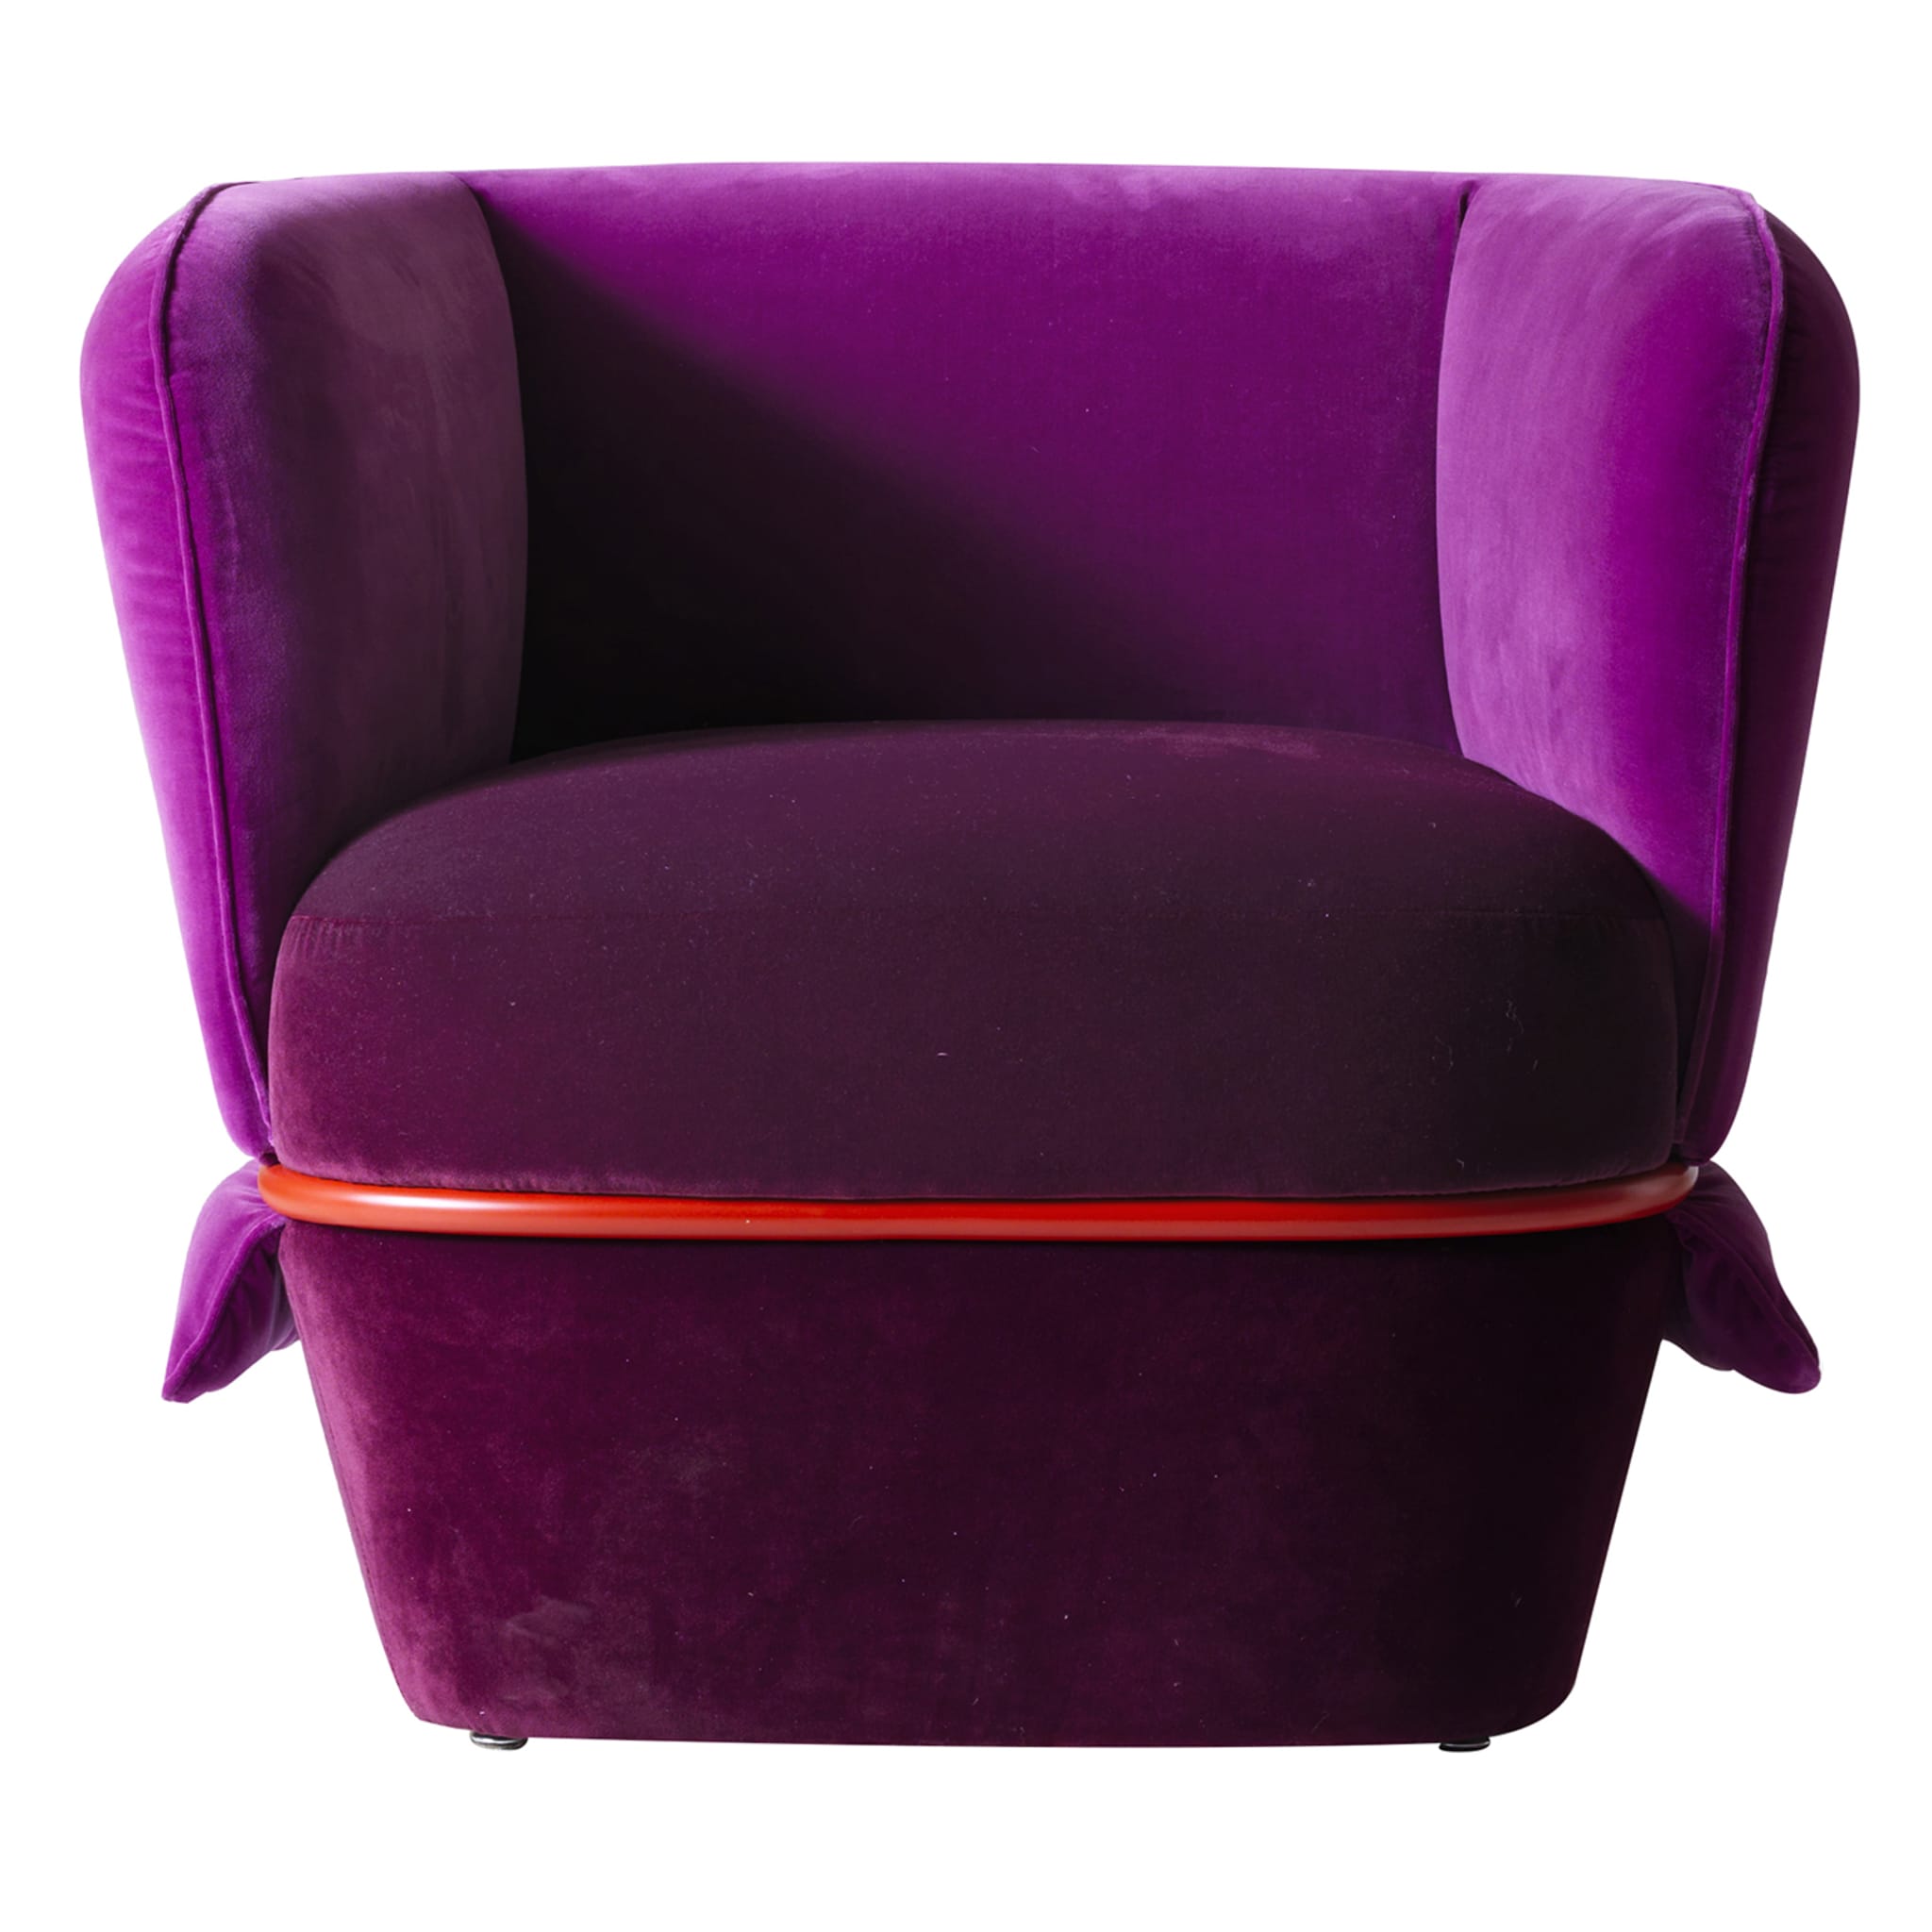 Chemise Purple Armchair by Studio LI_DO - Main view